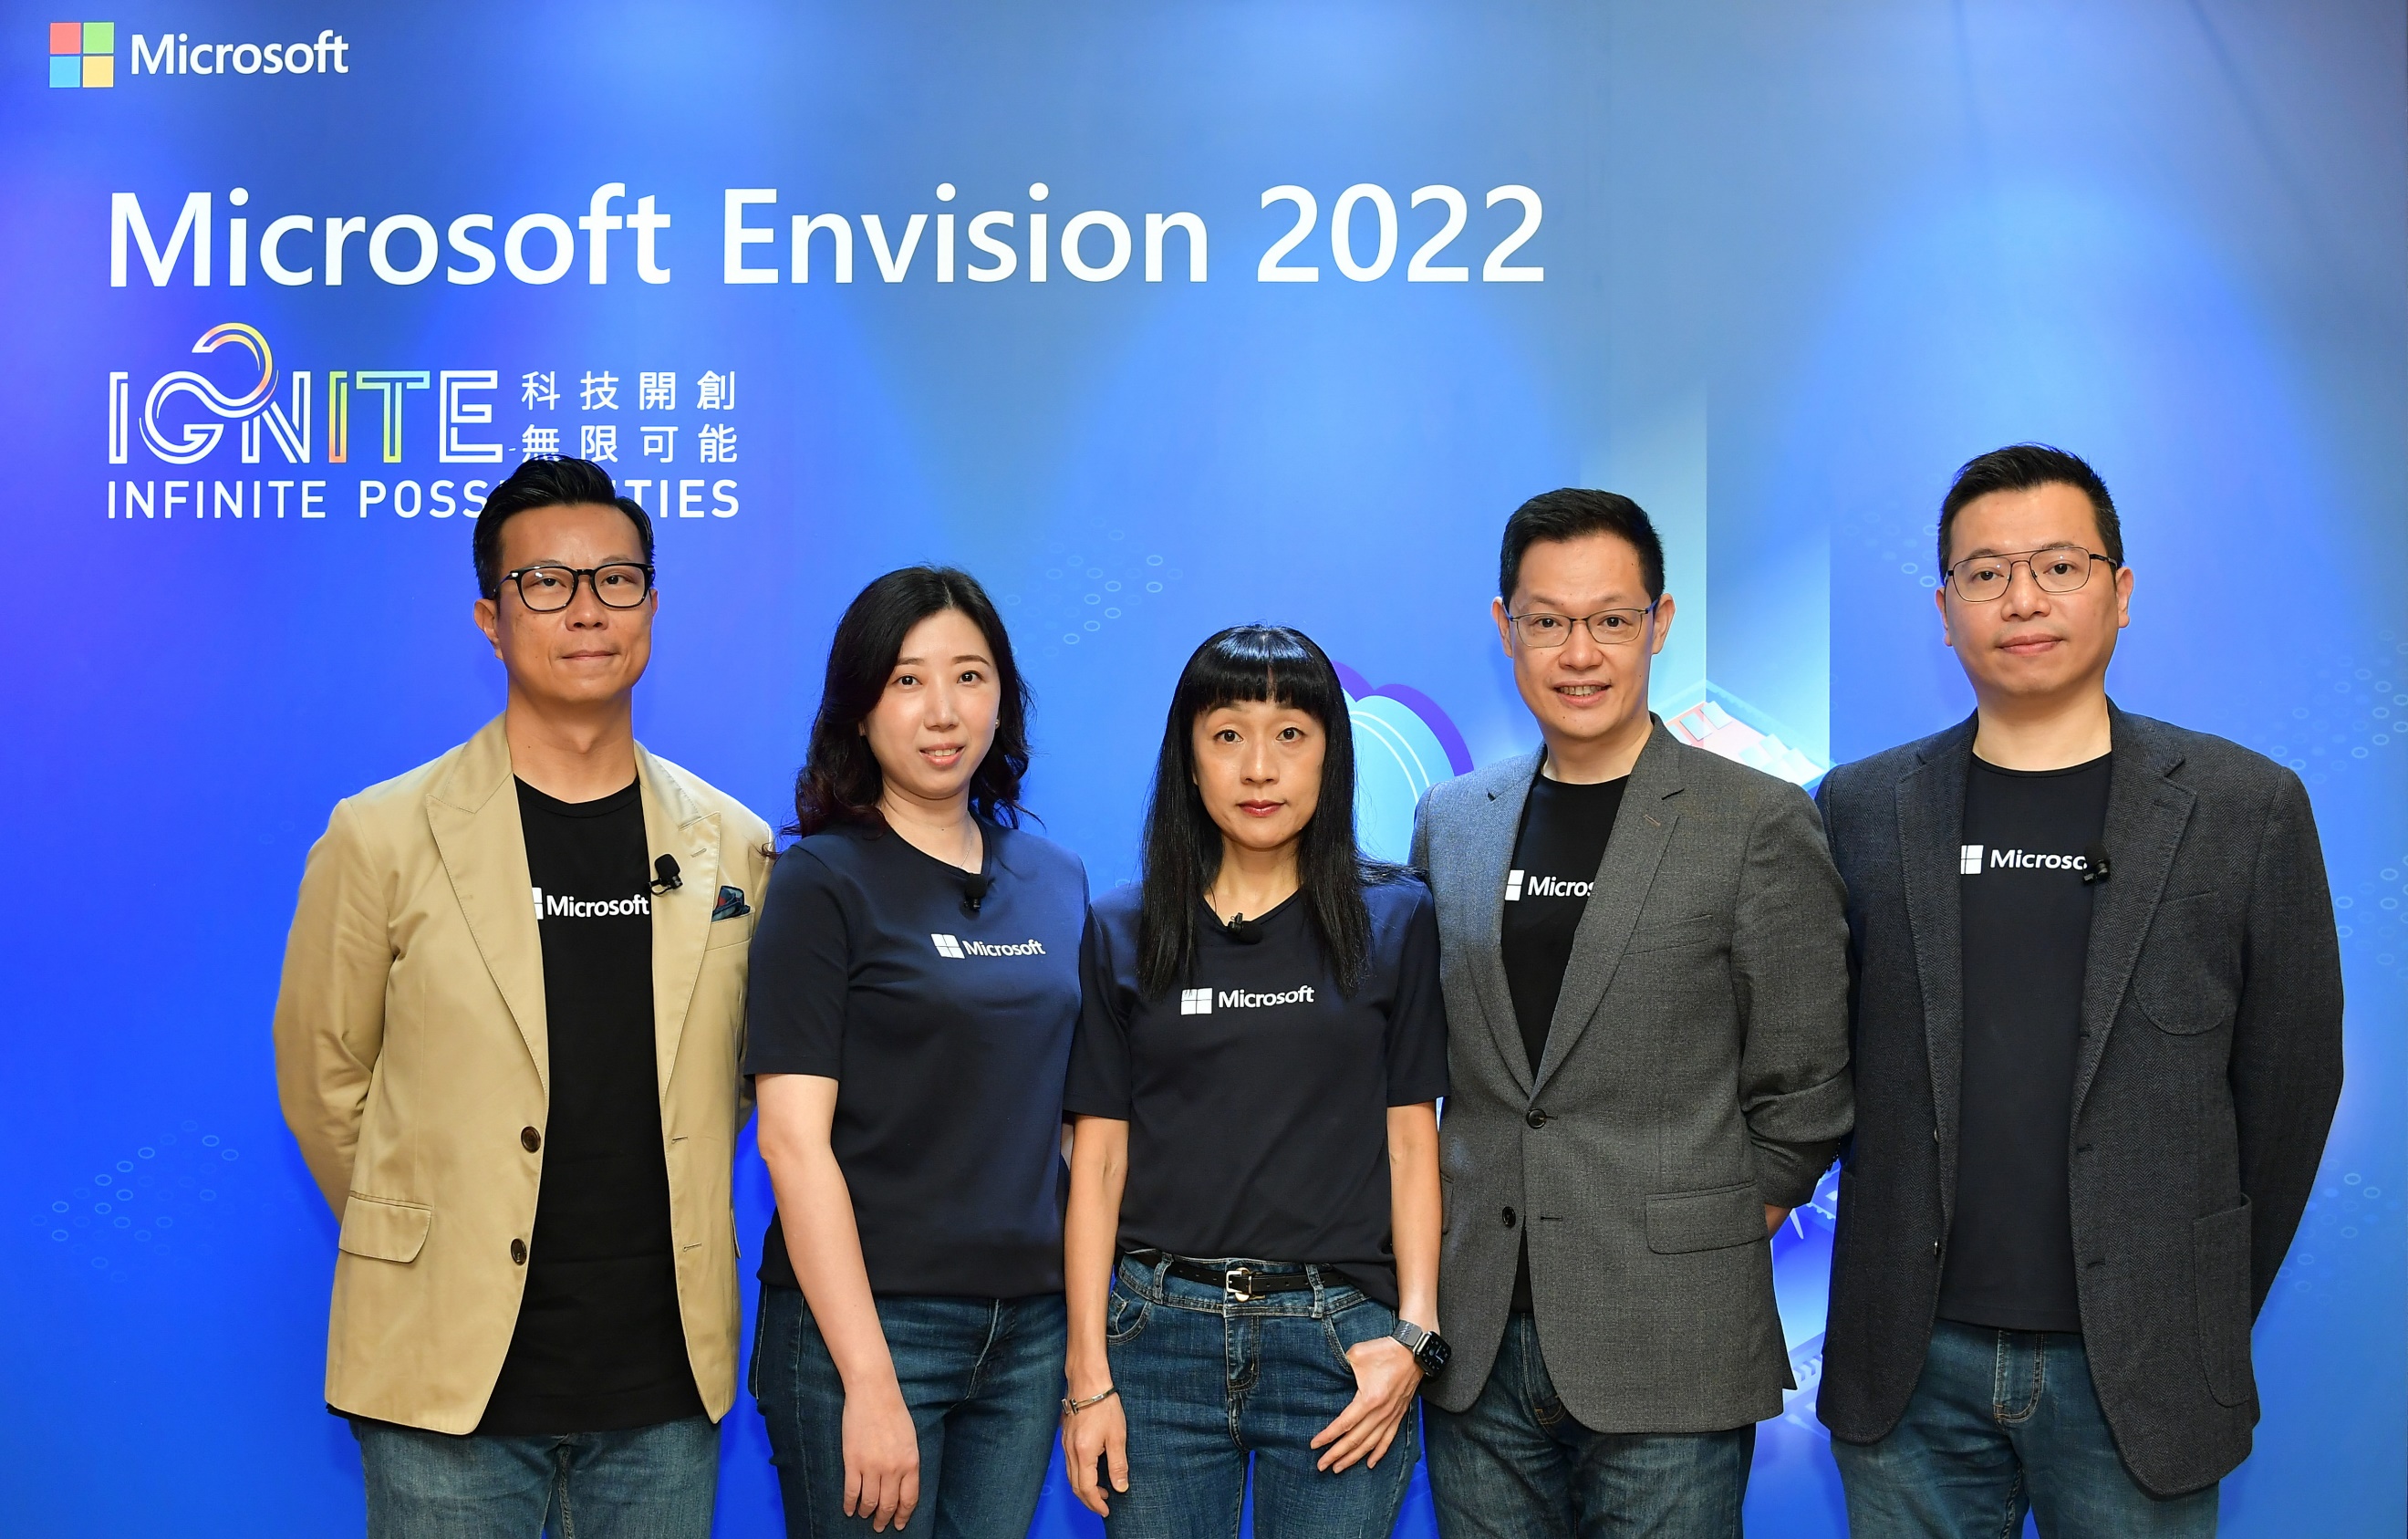 bicrosoft envision hong kong 2022 reveals 4 digital transformation trends business solutions